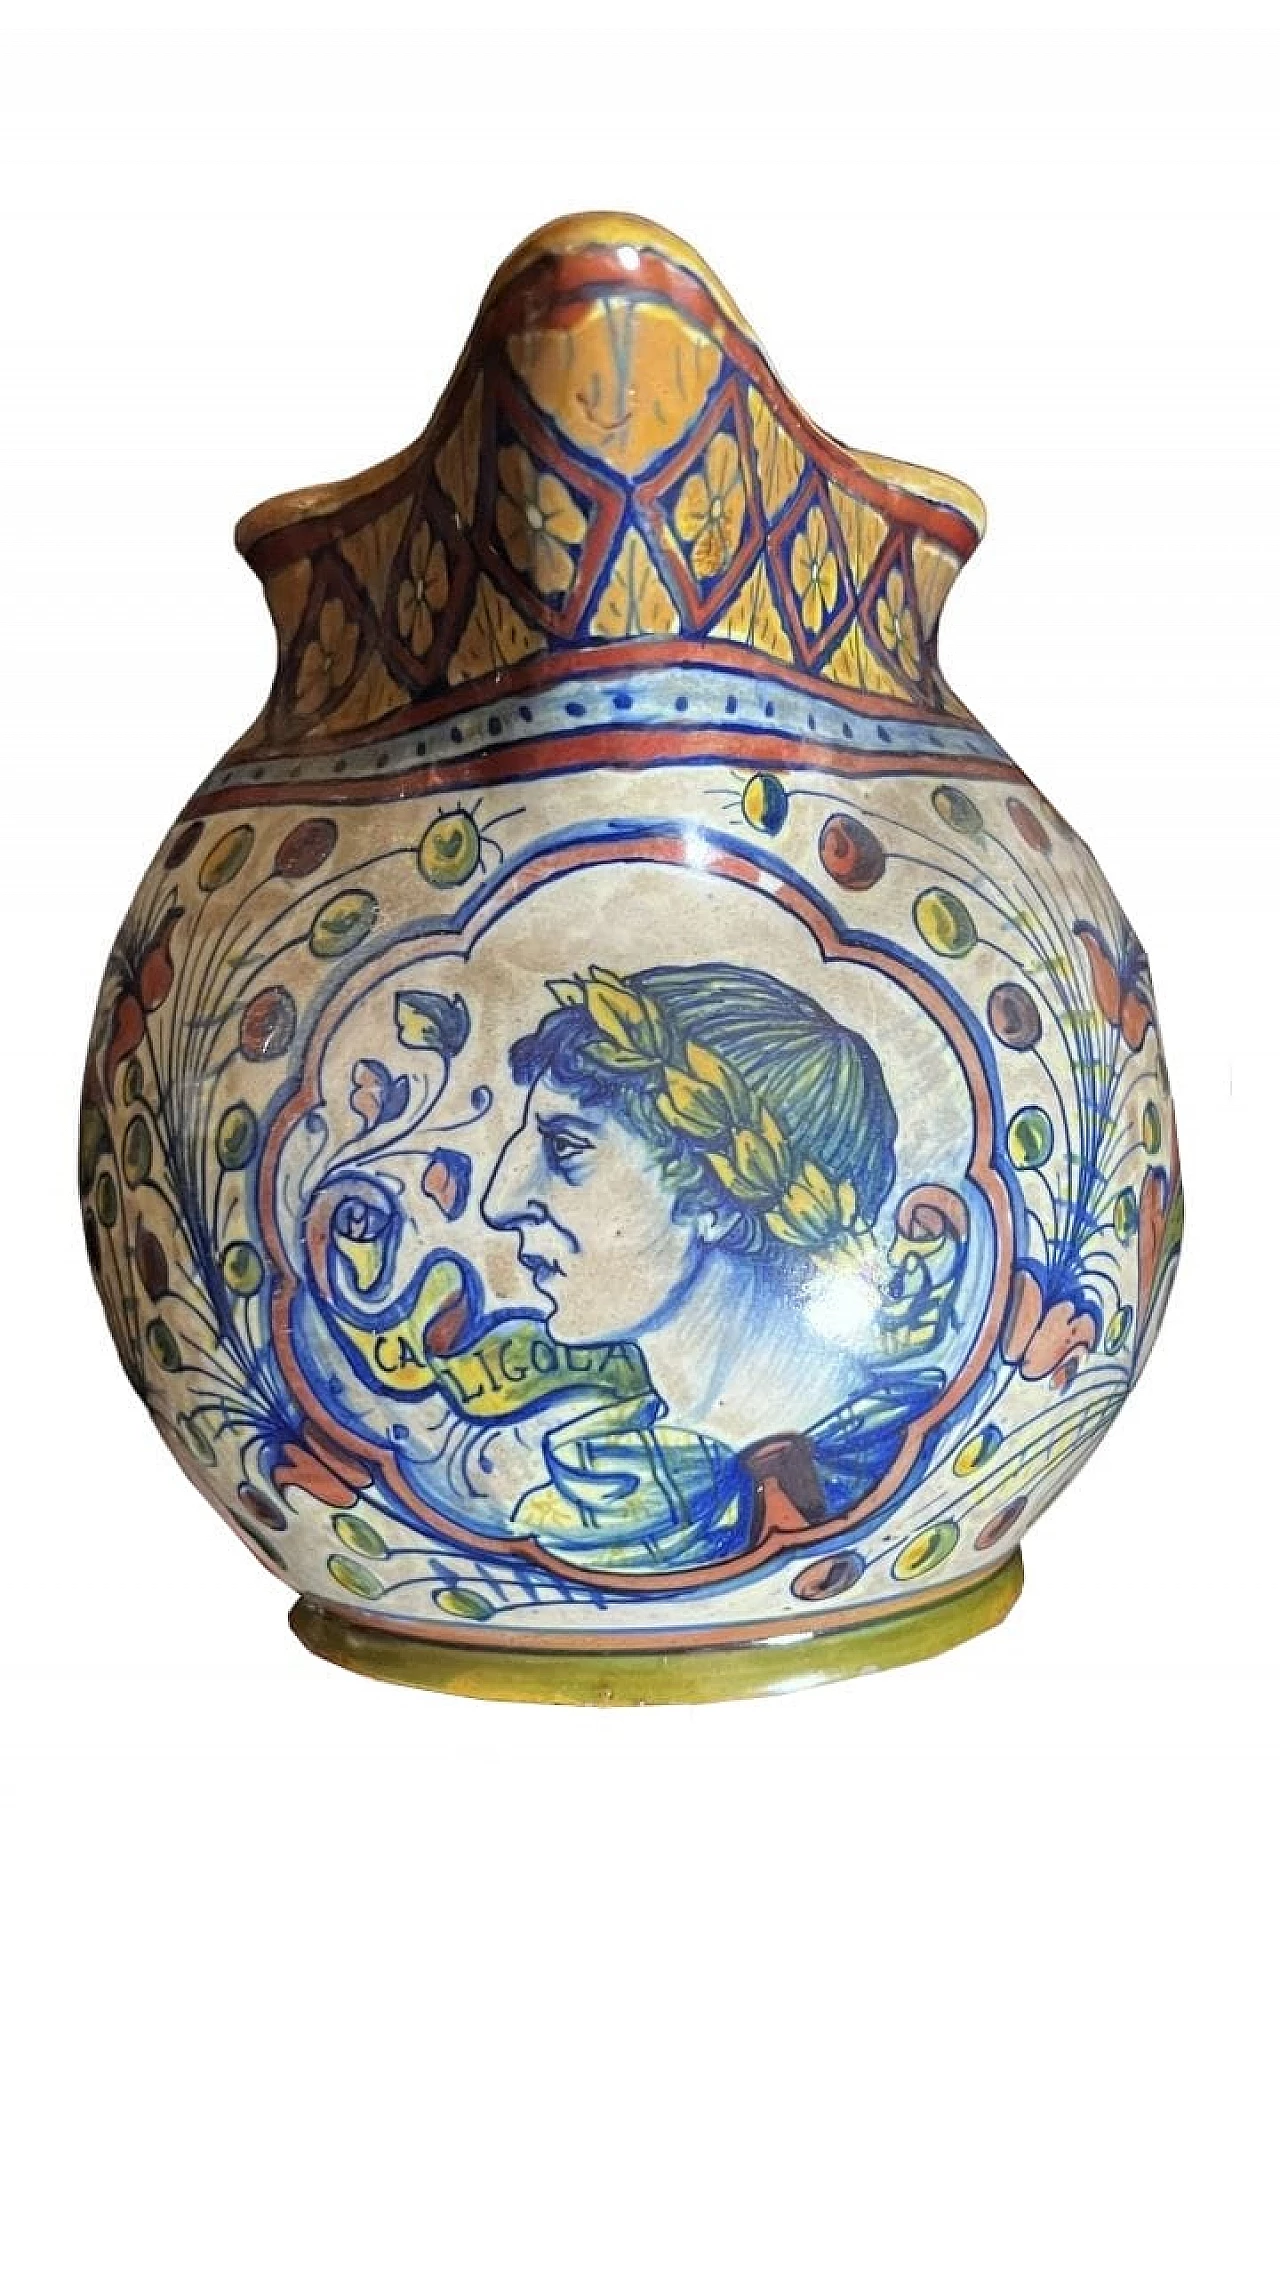 Ceramic pitcher with Caligula by Deruta, 1930s 6